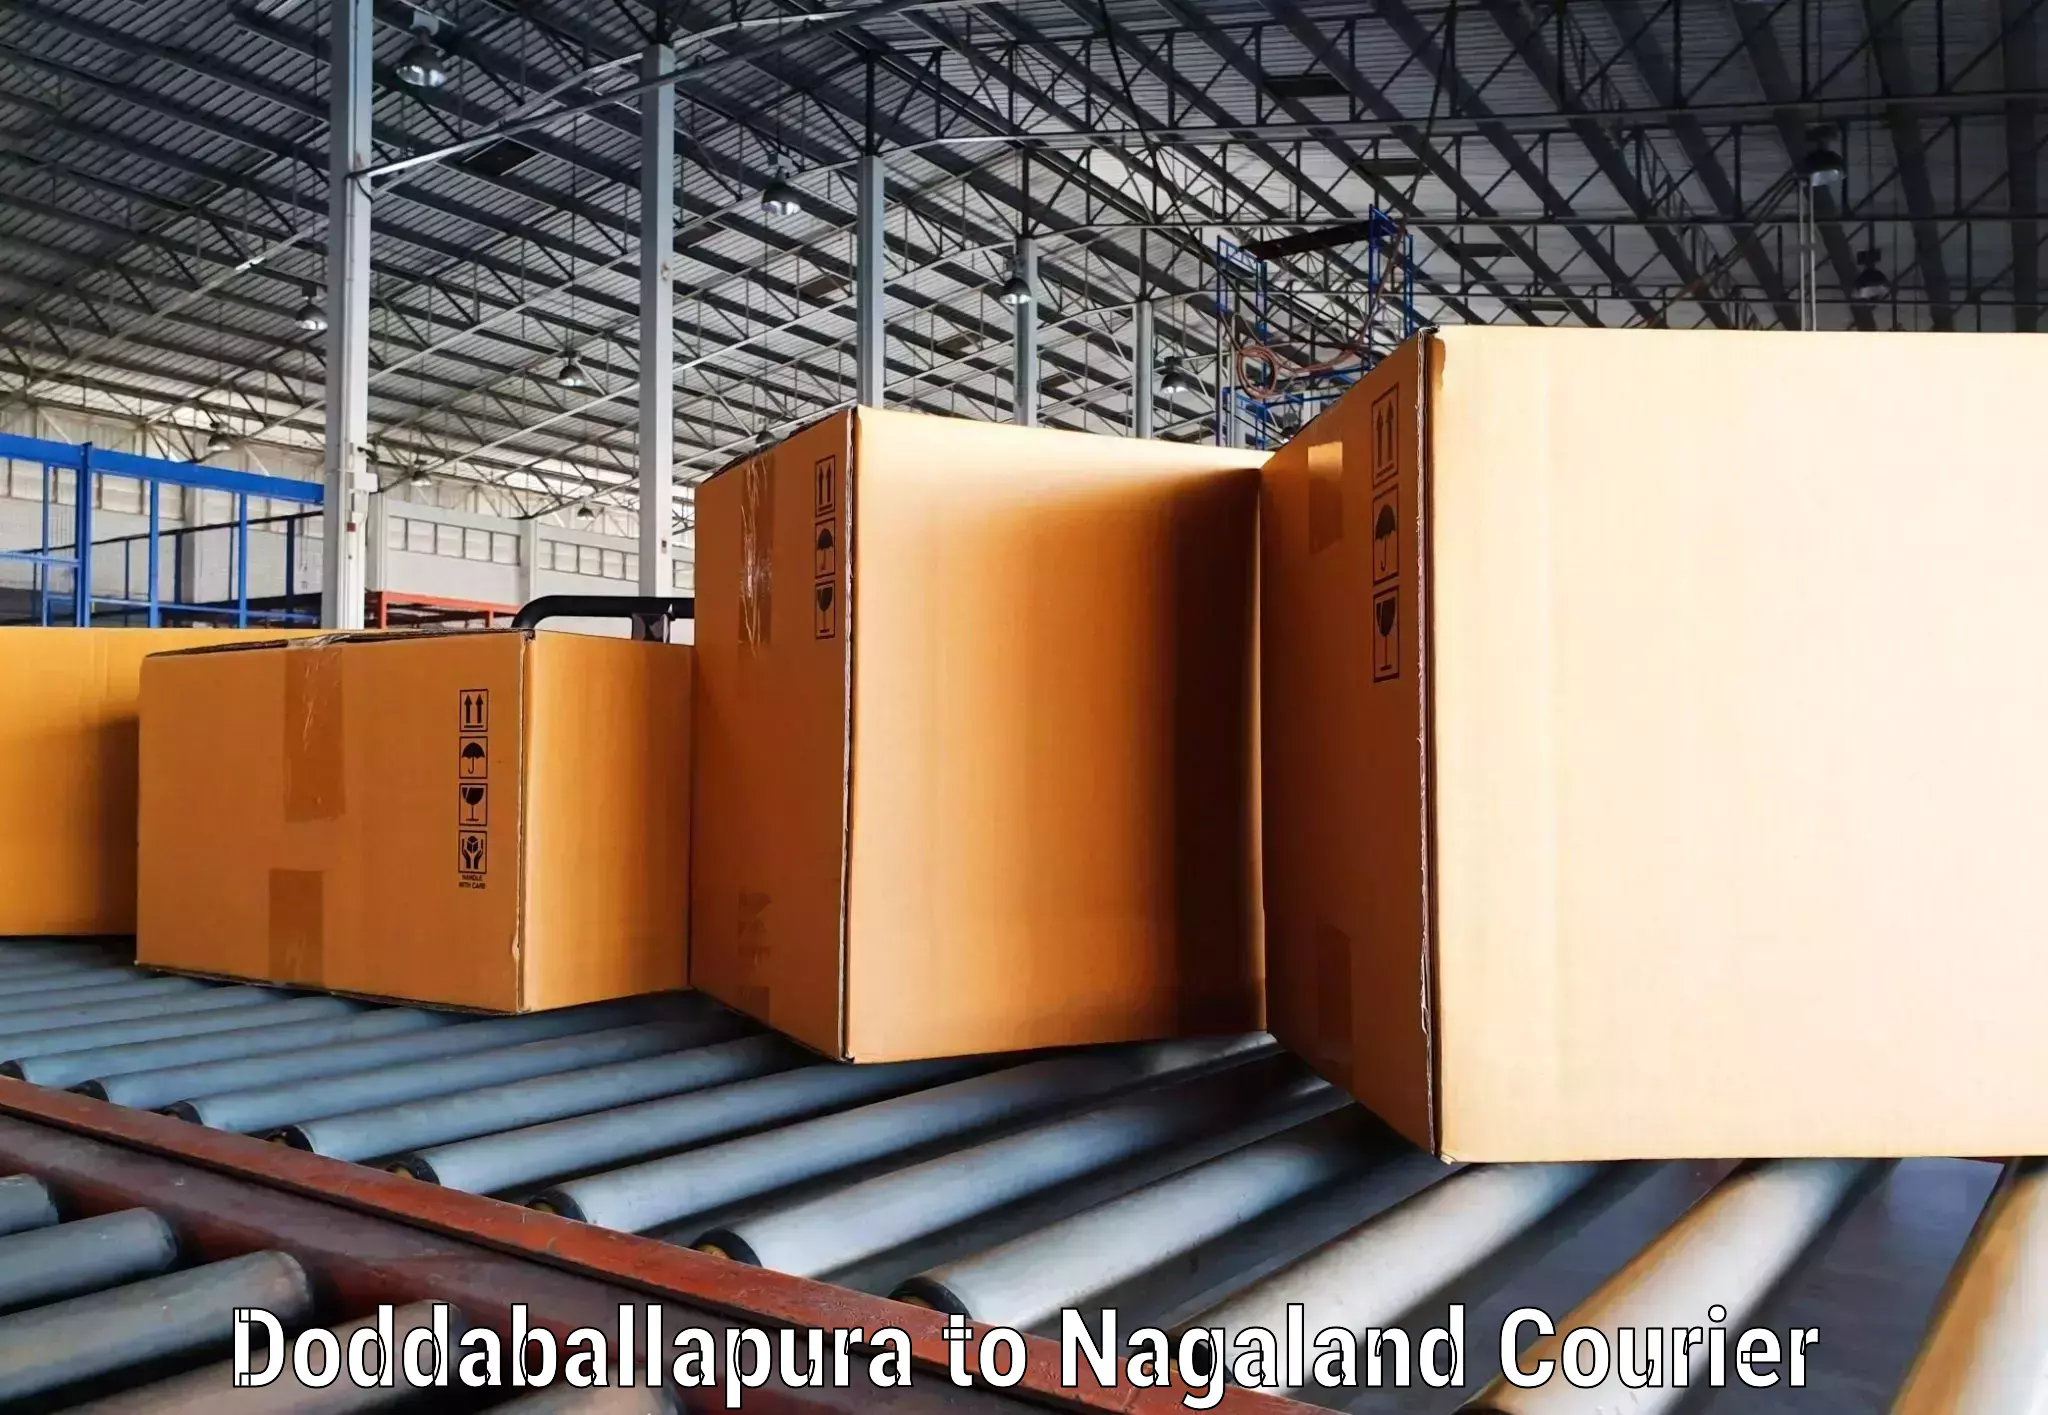 Nationwide delivery network Doddaballapura to Mon